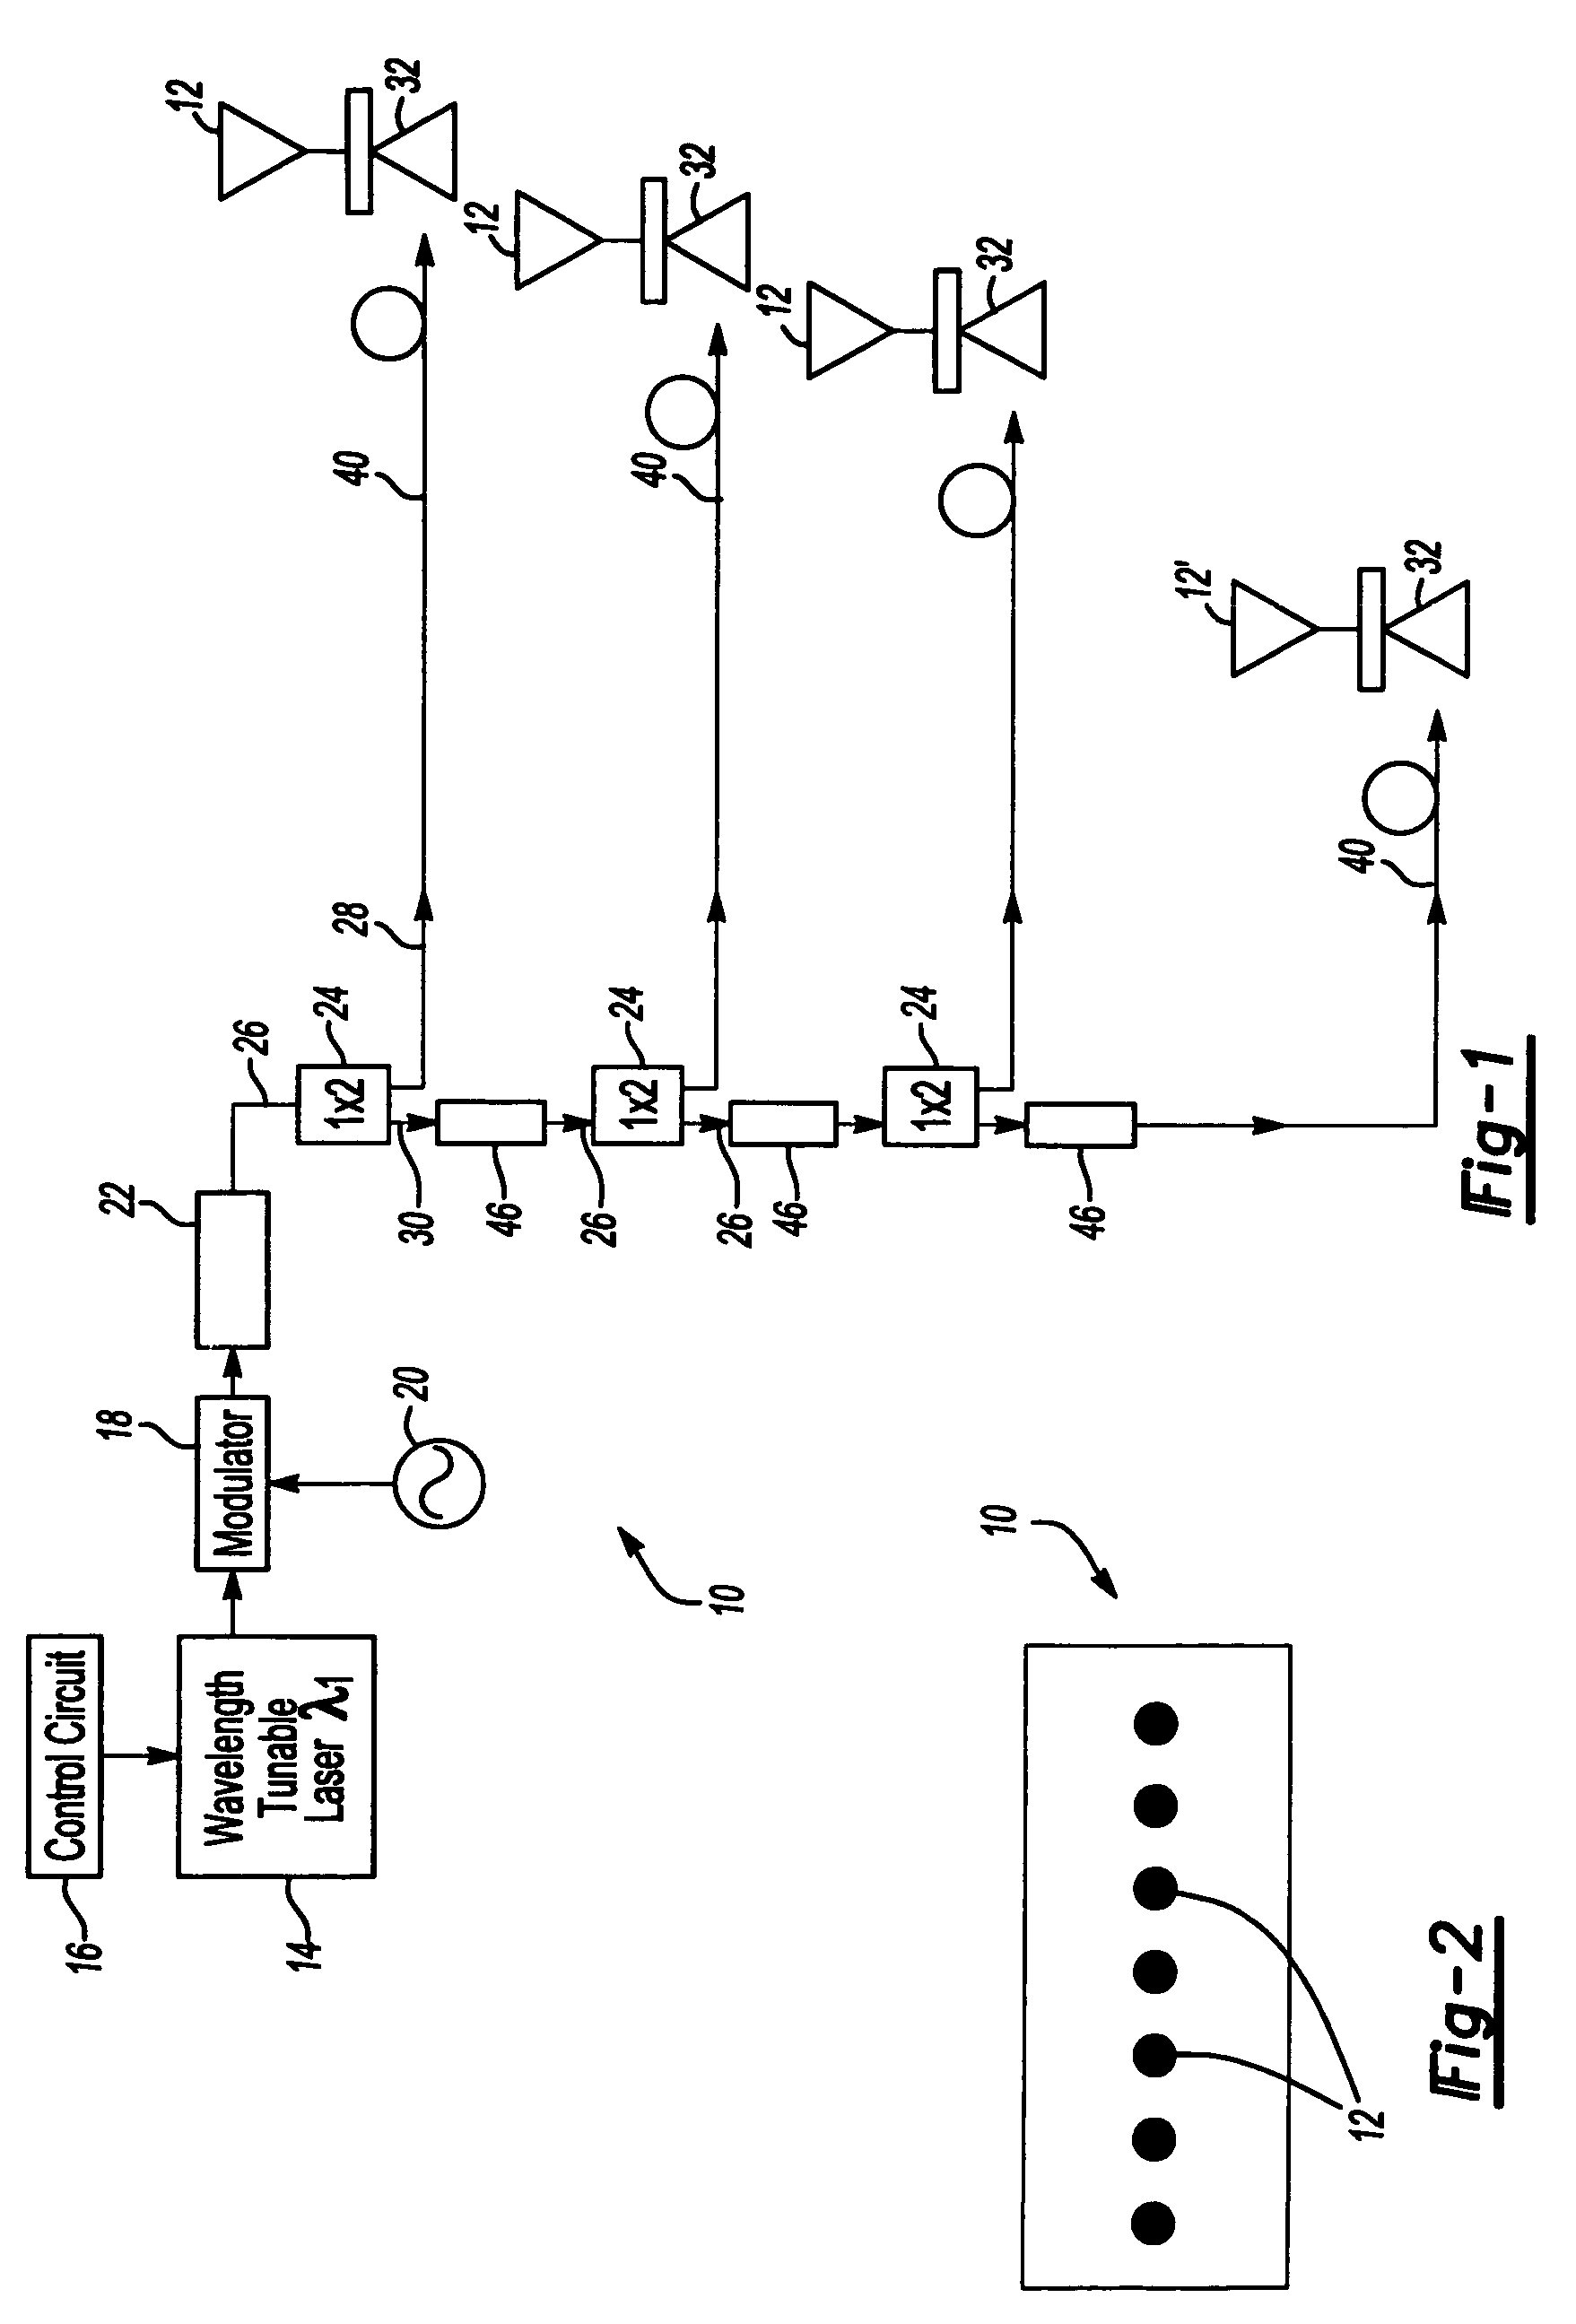 Electro optical scanning multi-function antenna